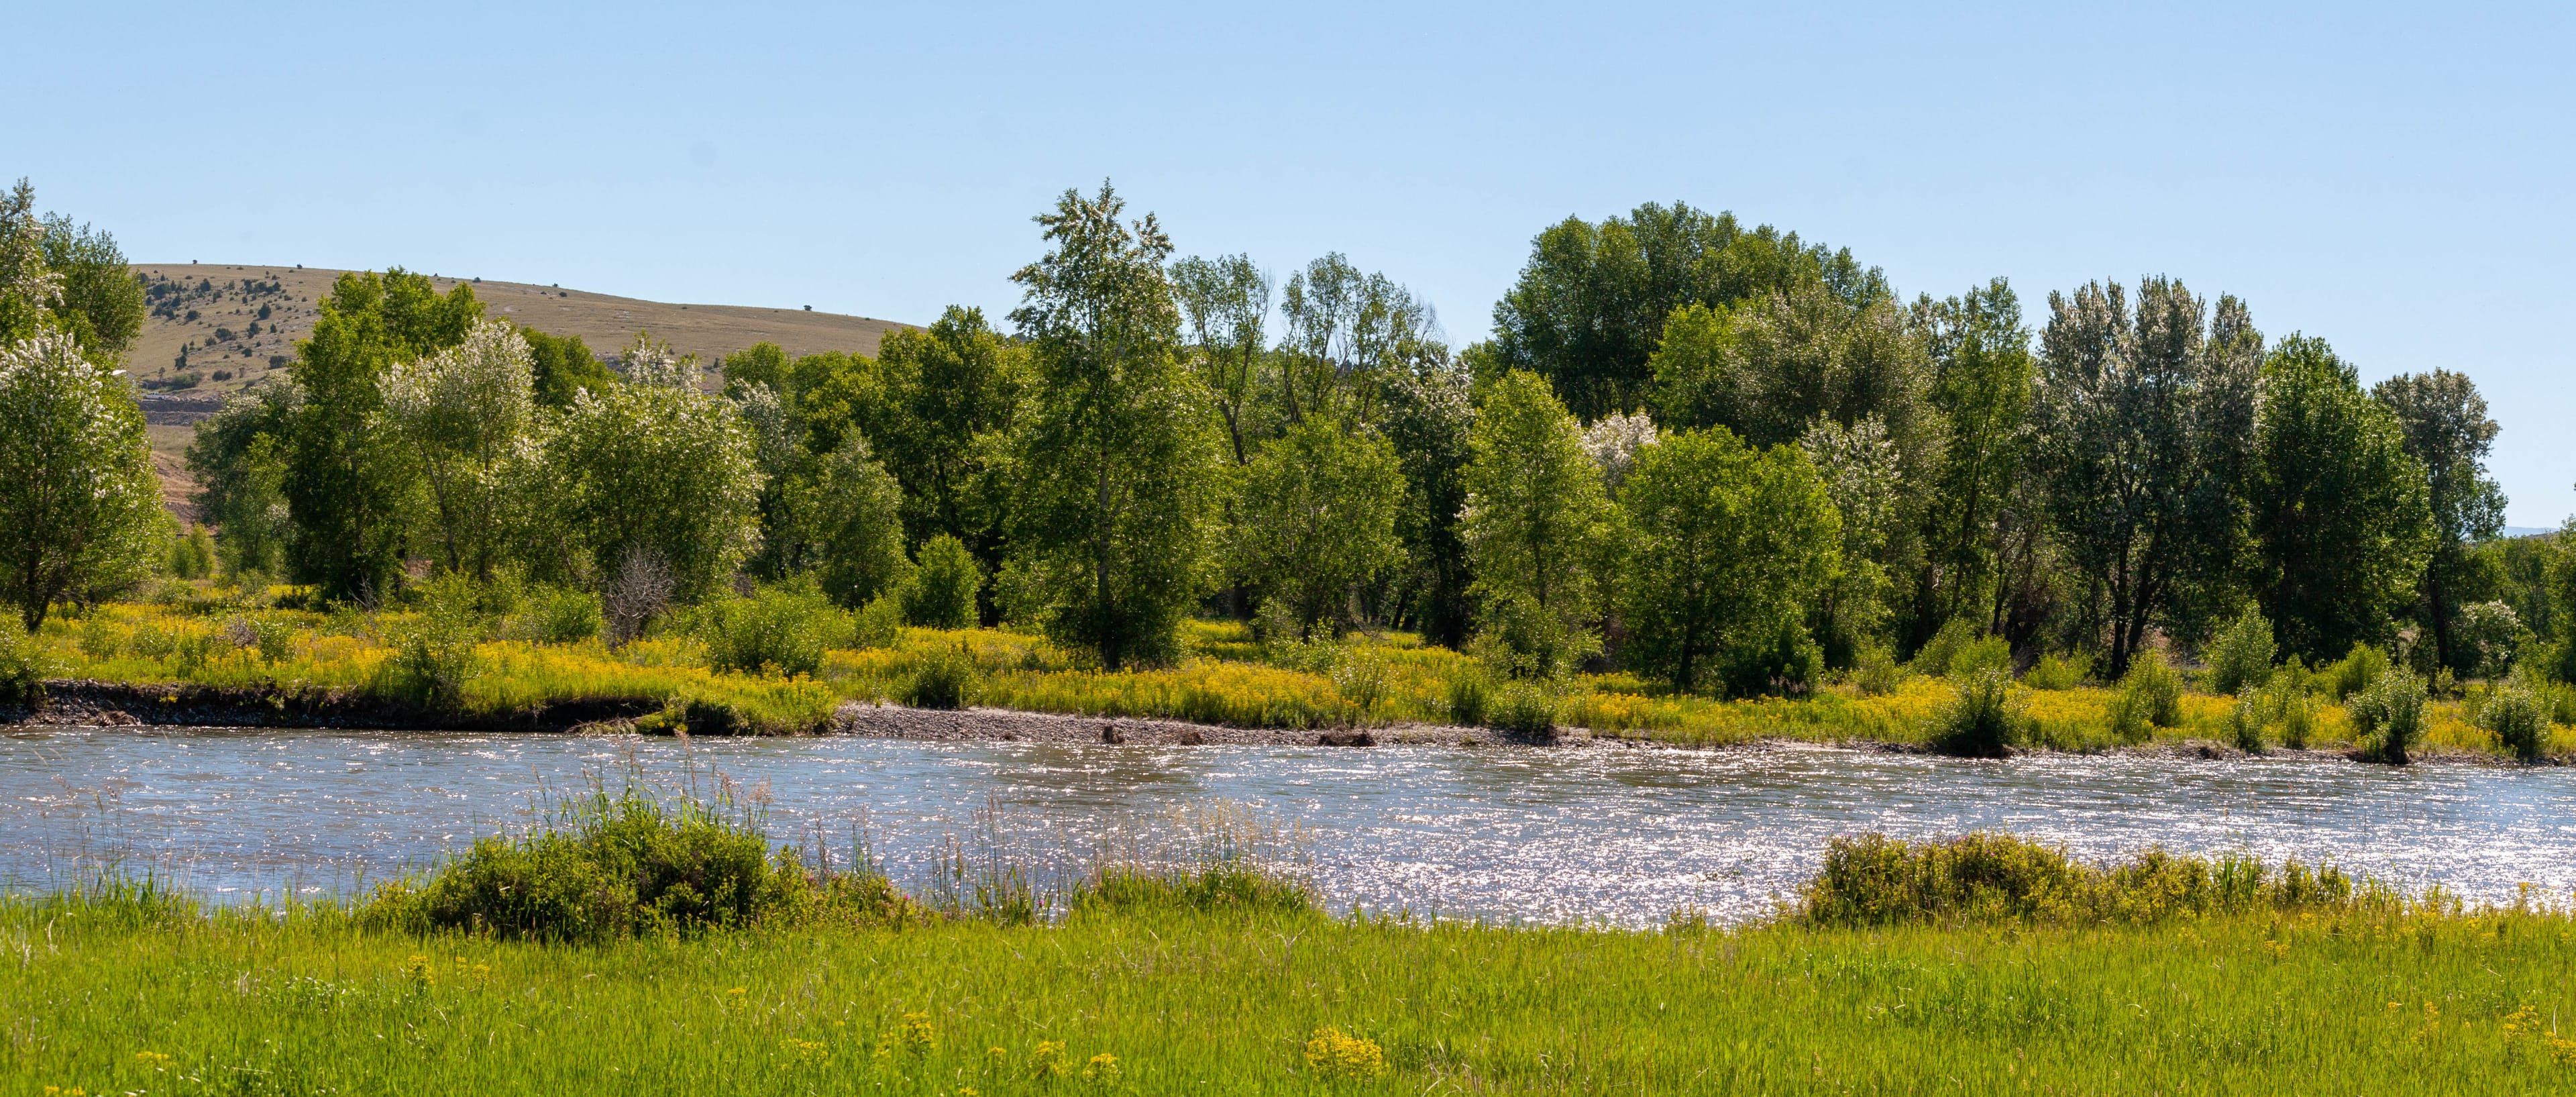 Gallatin River from Campsite